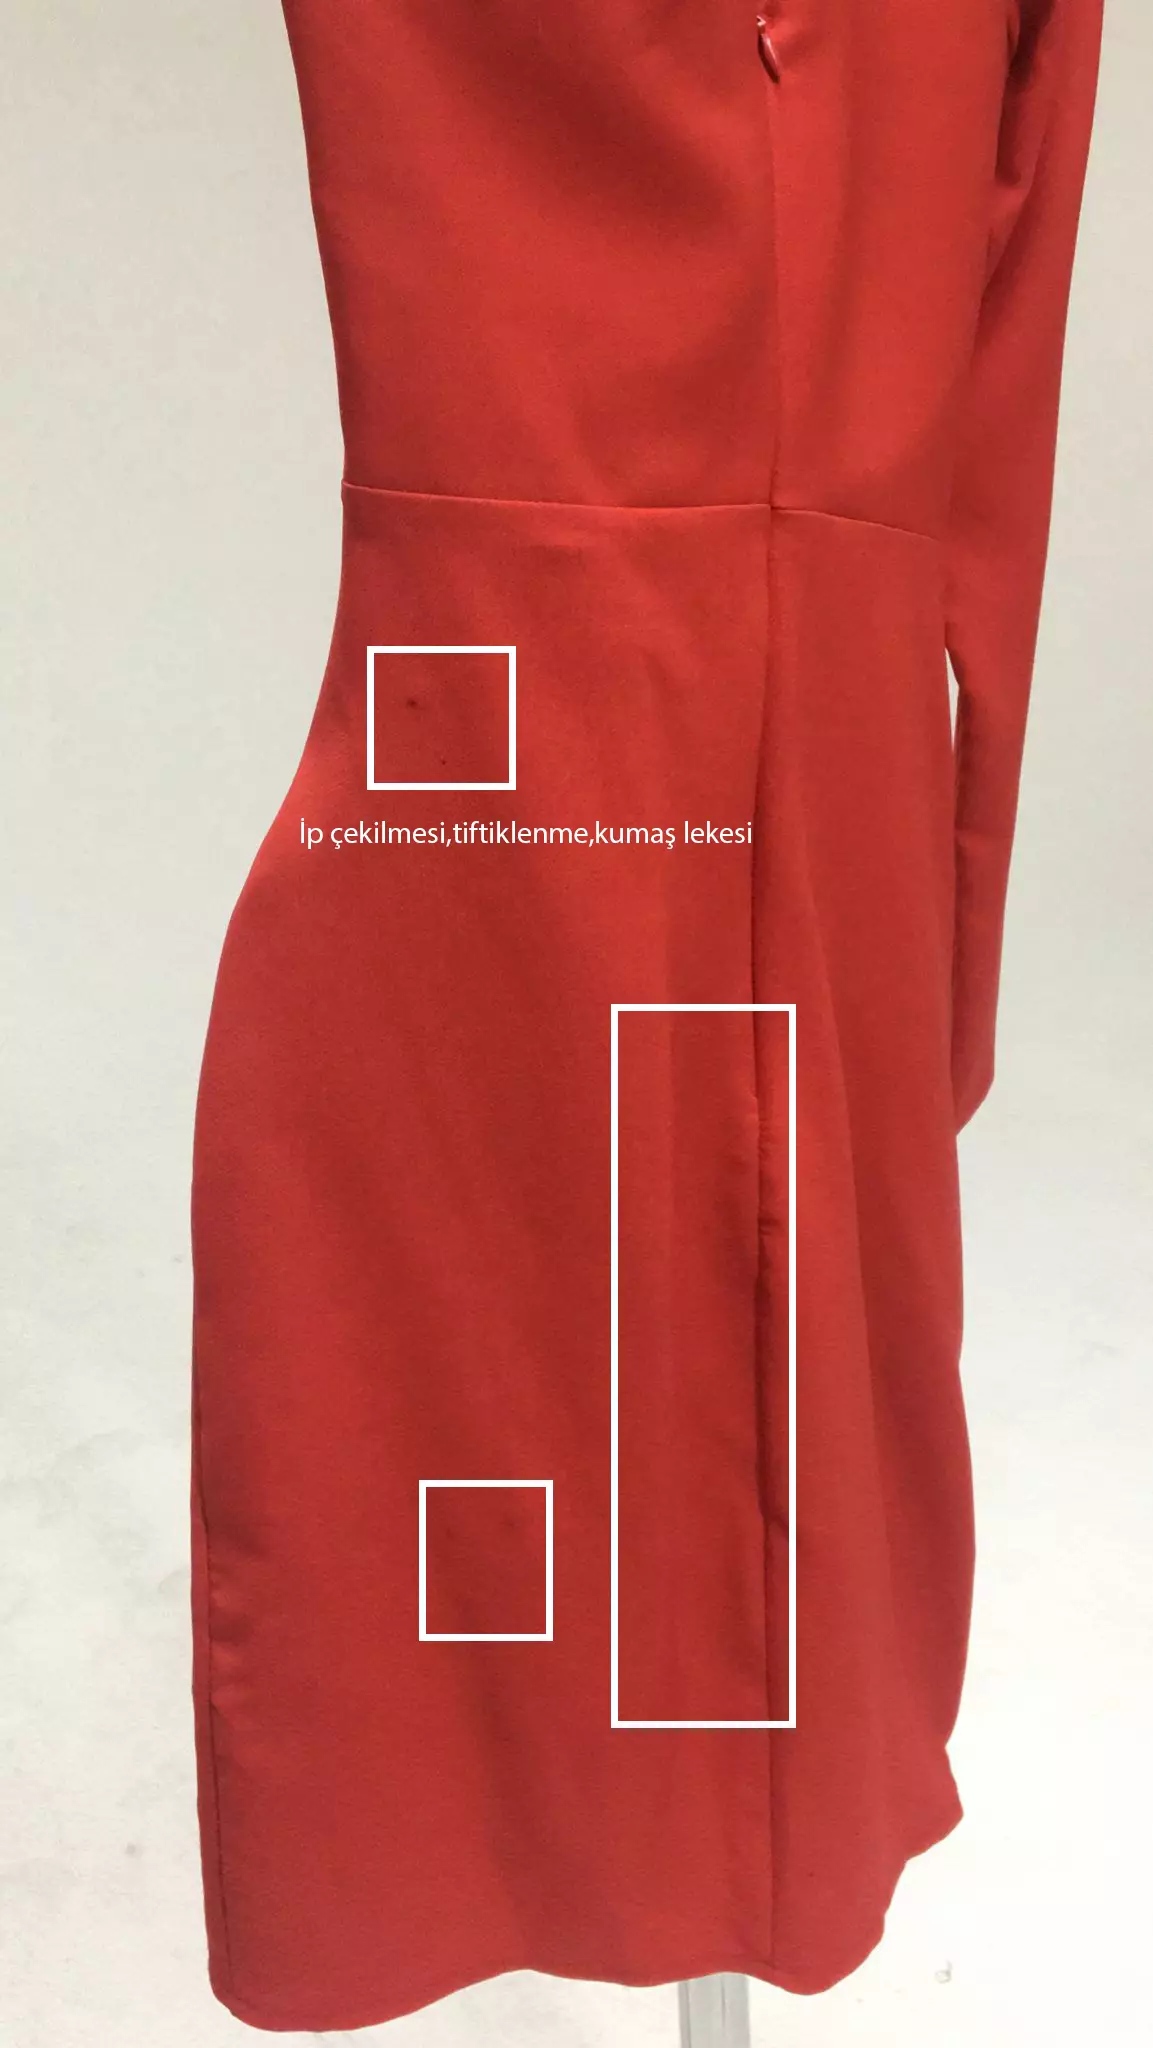 Red crepe one arm mini dress